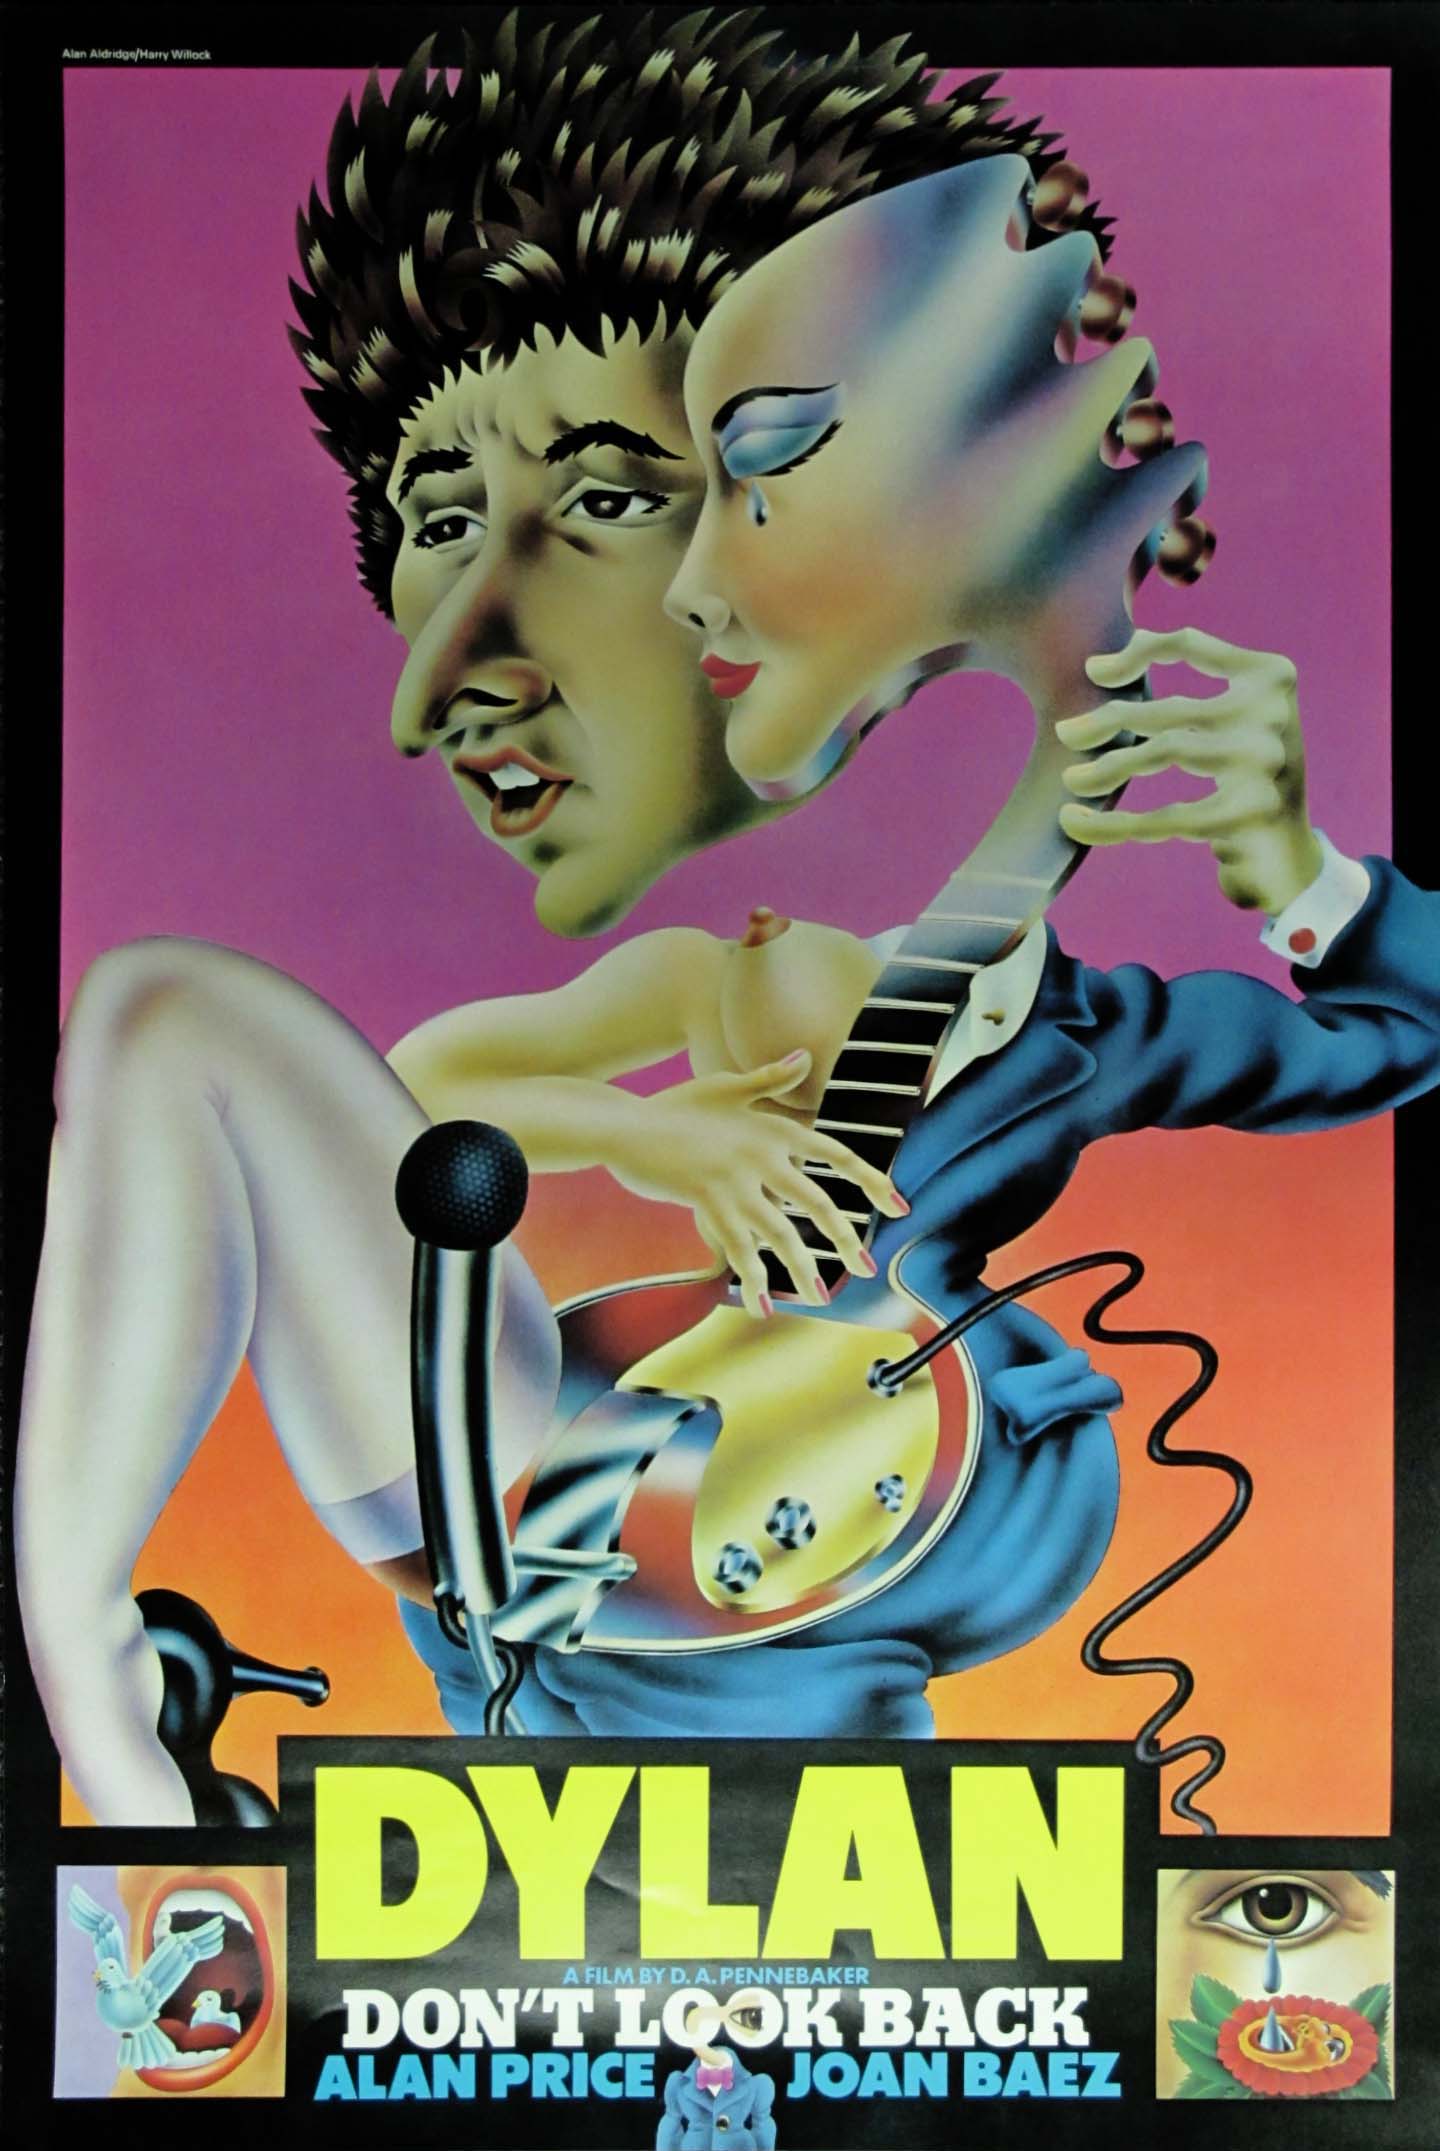 Bob Dylan "Don't Look Back" Original Poster